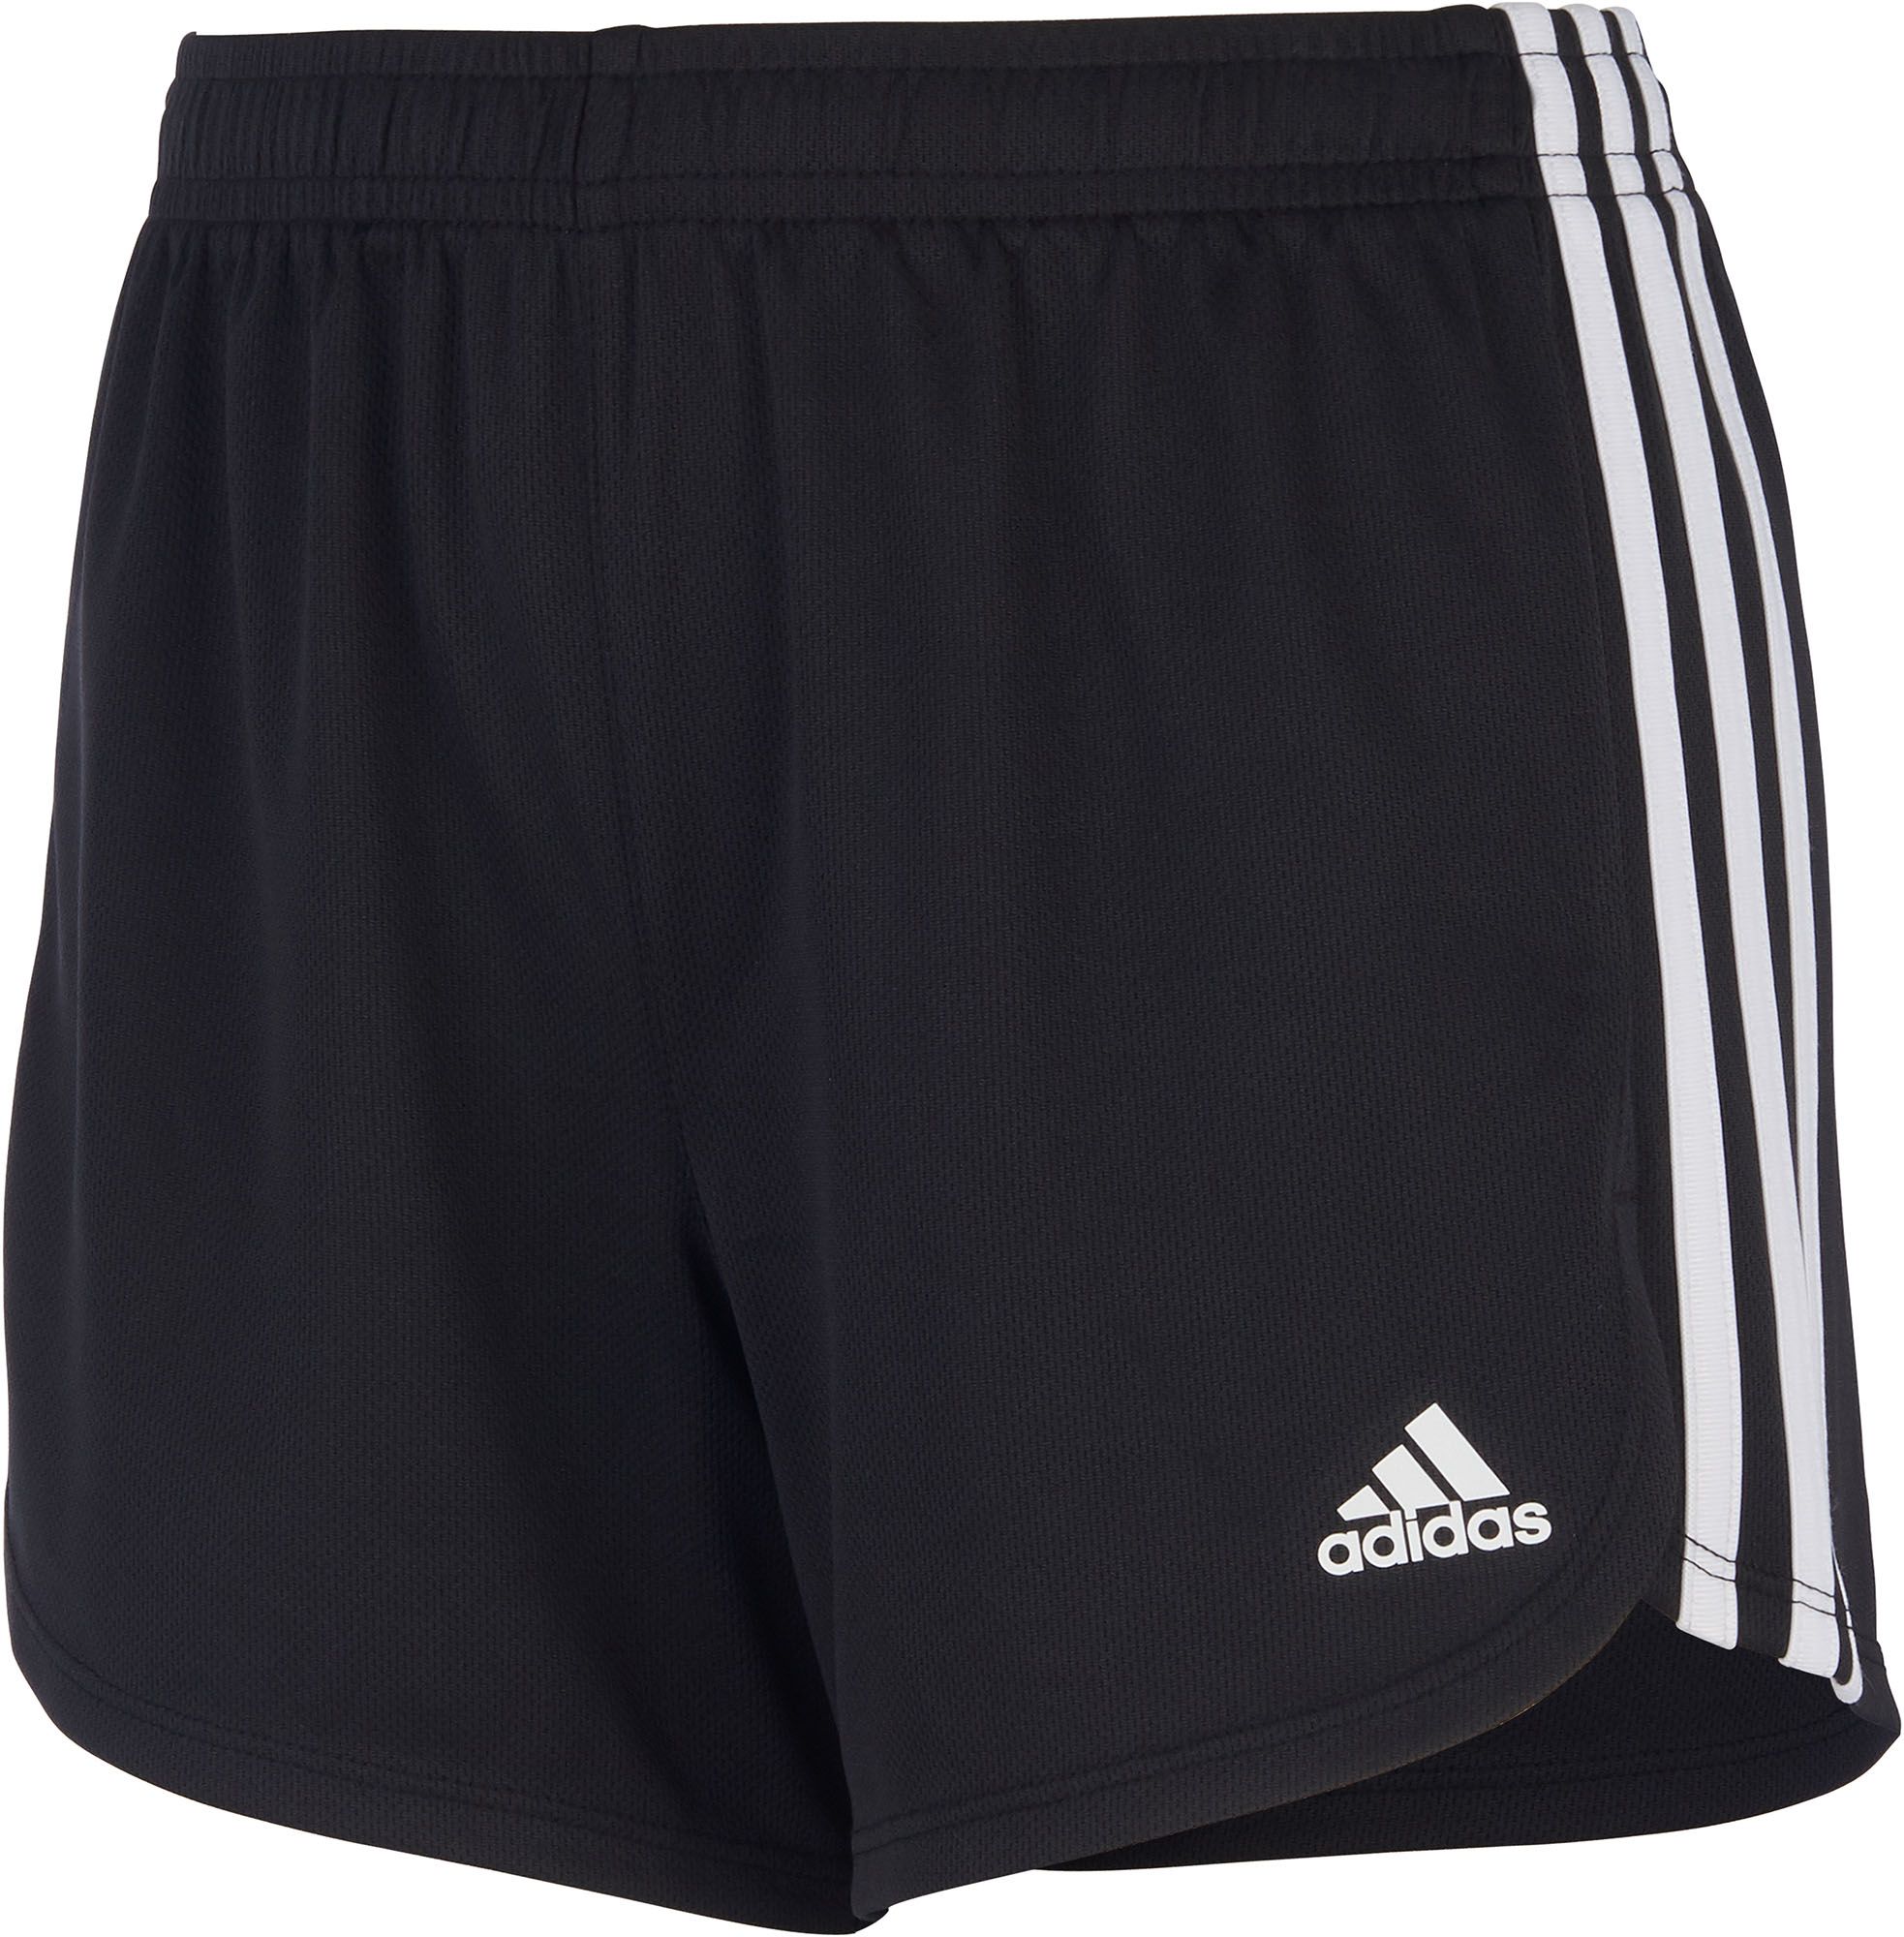 adidas running 3 stripe shorts in black